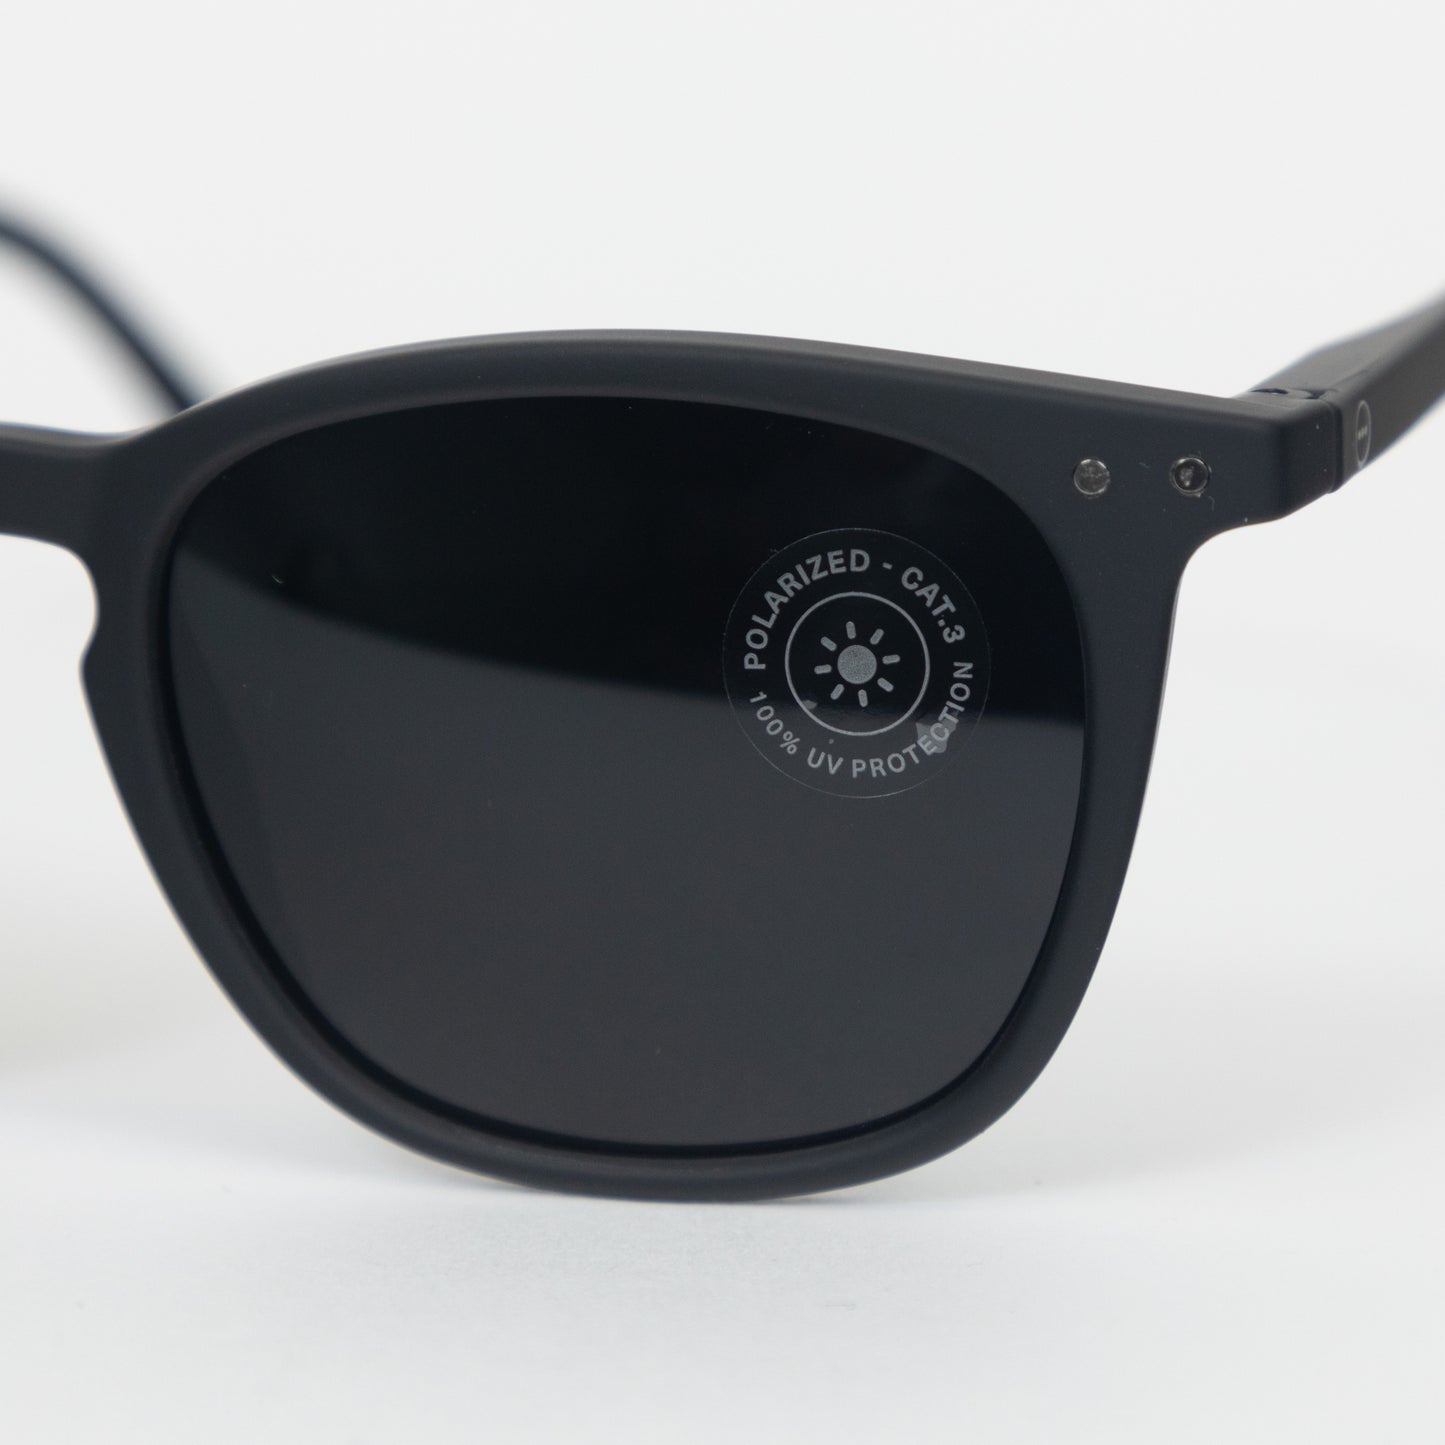 IZIPIZI #E The Polarized Sunglasses in BLACK